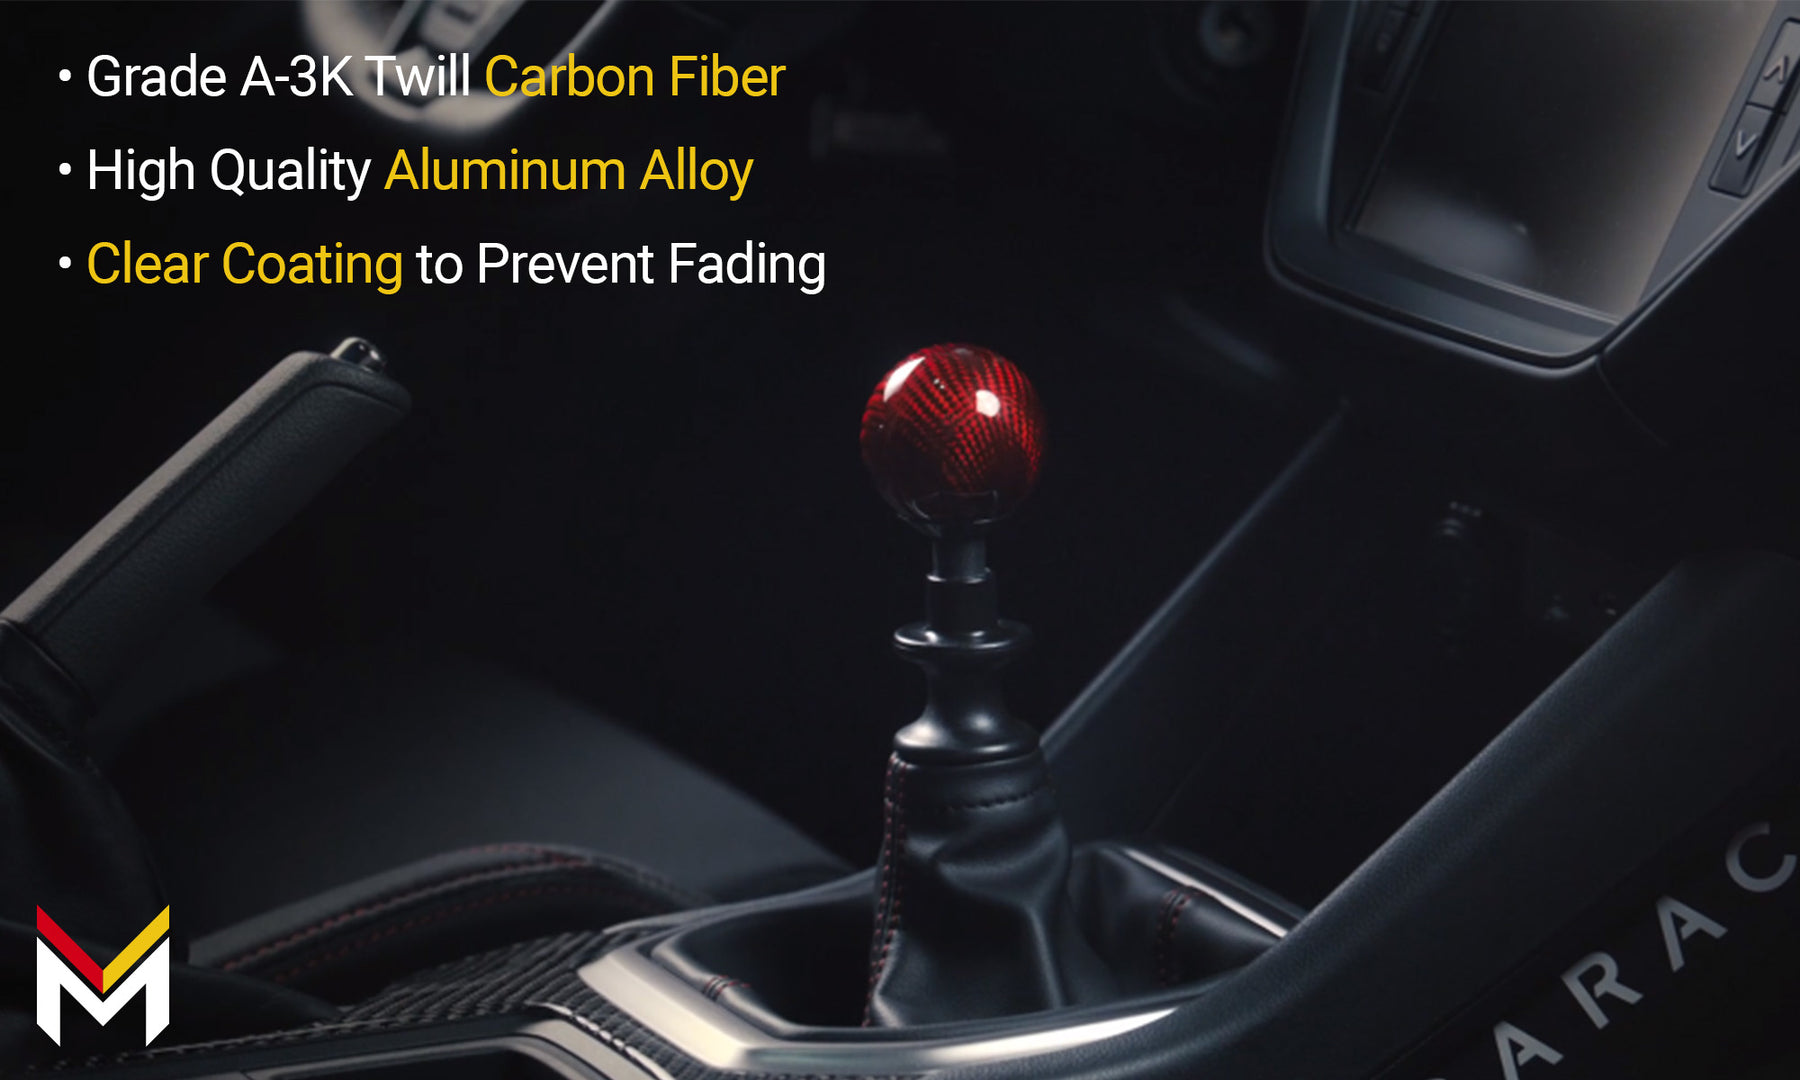 mega racer round shift knob real carbon fiber jdm inspired design manual transmission subaru brz wrx